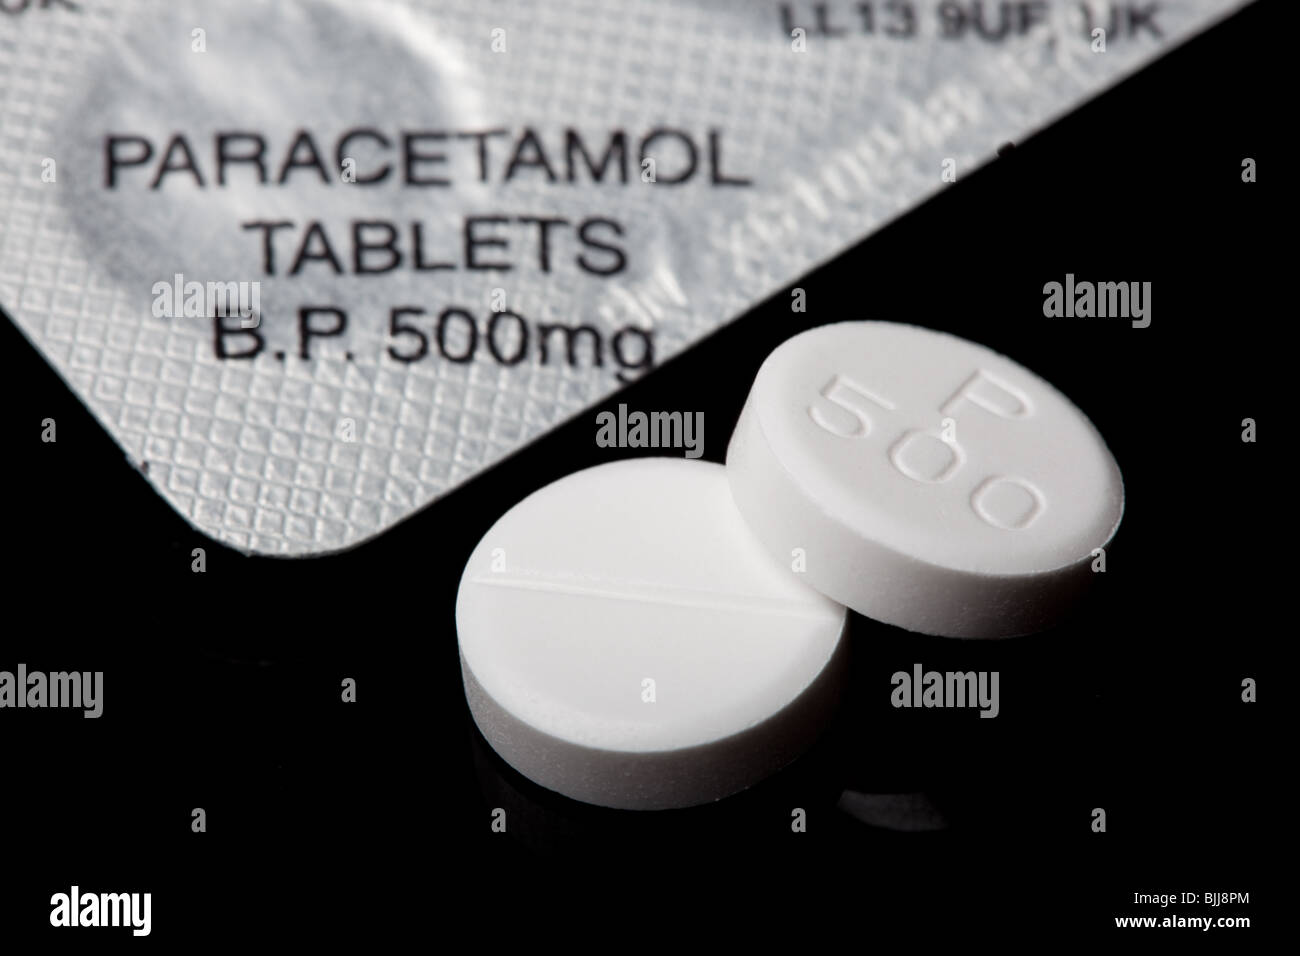 paracetamol-tablets-BJJ8PM.jpg